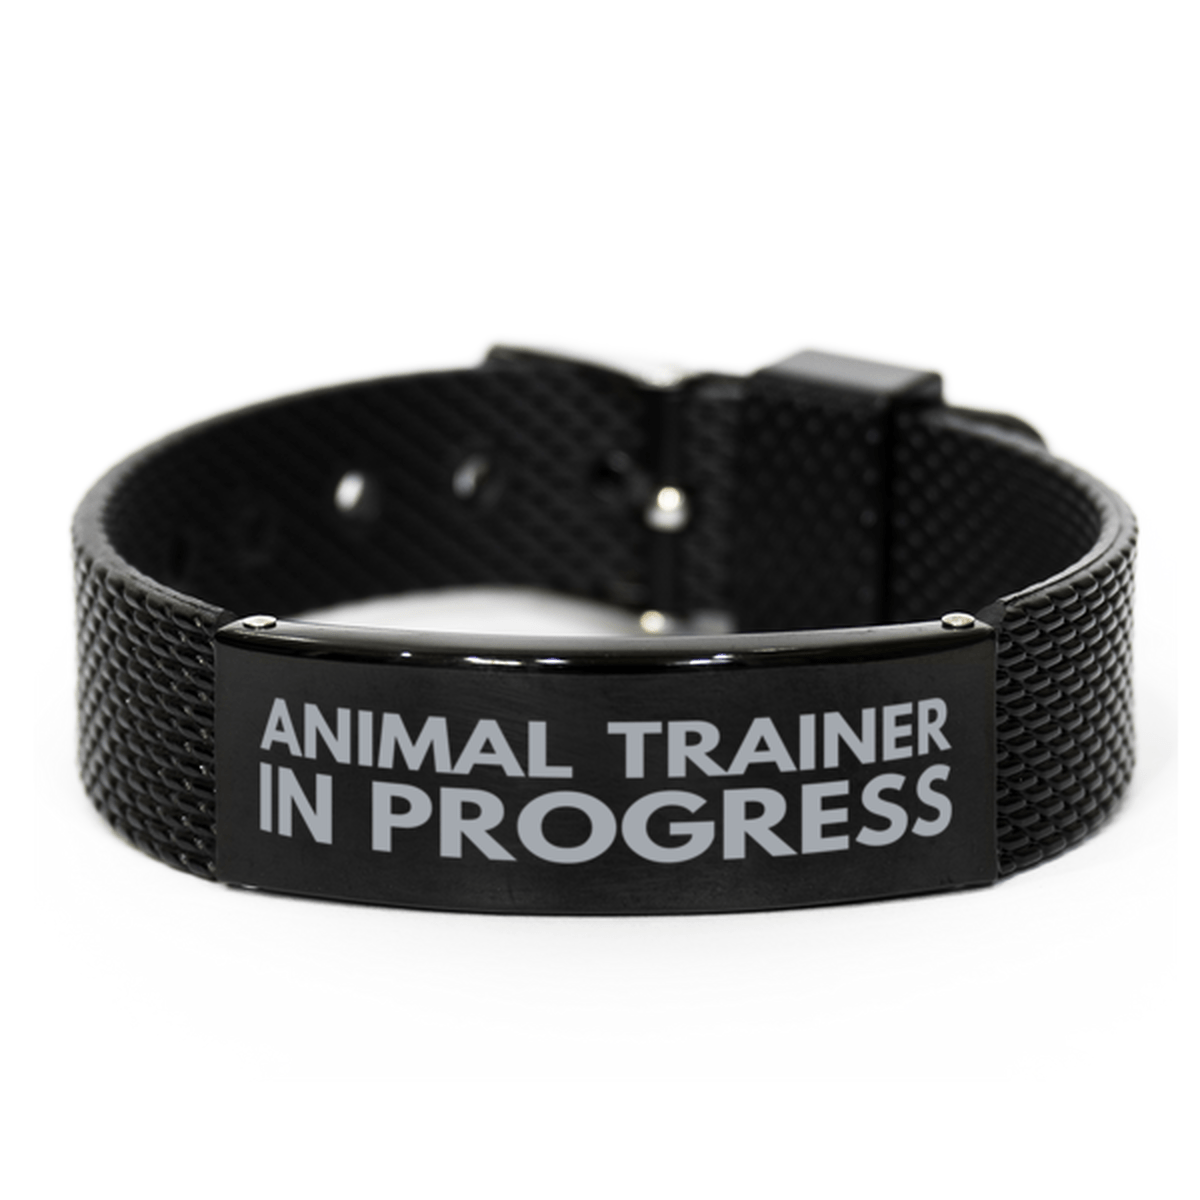 Inspirational Animal Trainer Black Shark Mesh Bracelet, Animal Trainer In Progress, Best Graduation Gifts for Students